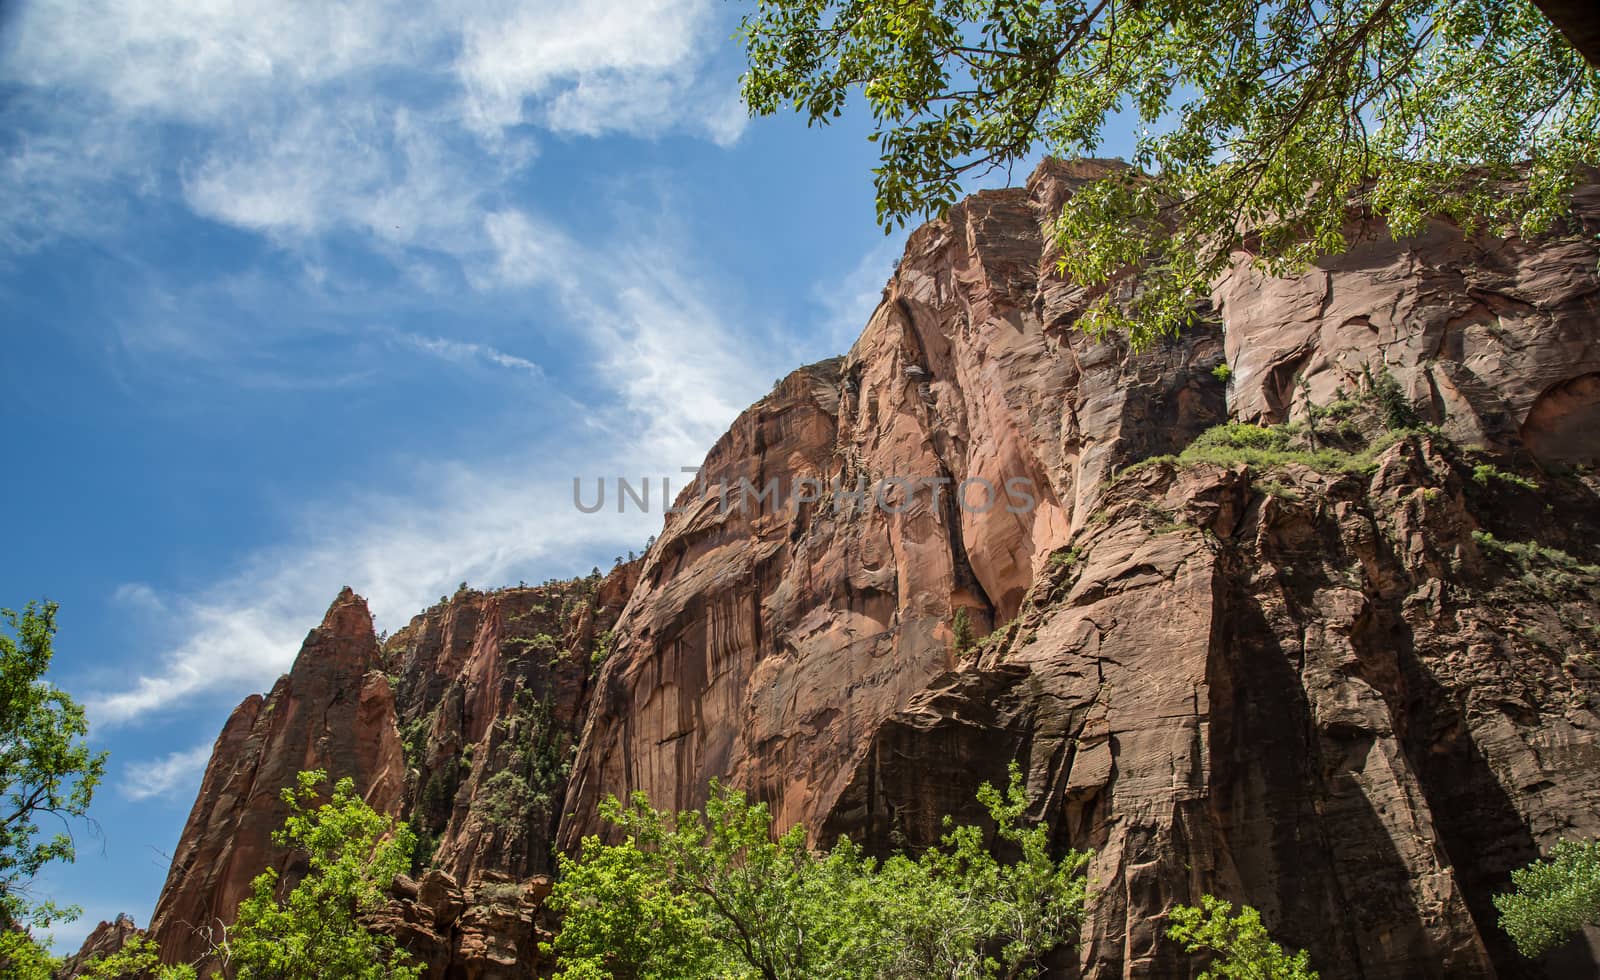 Cliffs of Zion by teacherdad48@yahoo.com